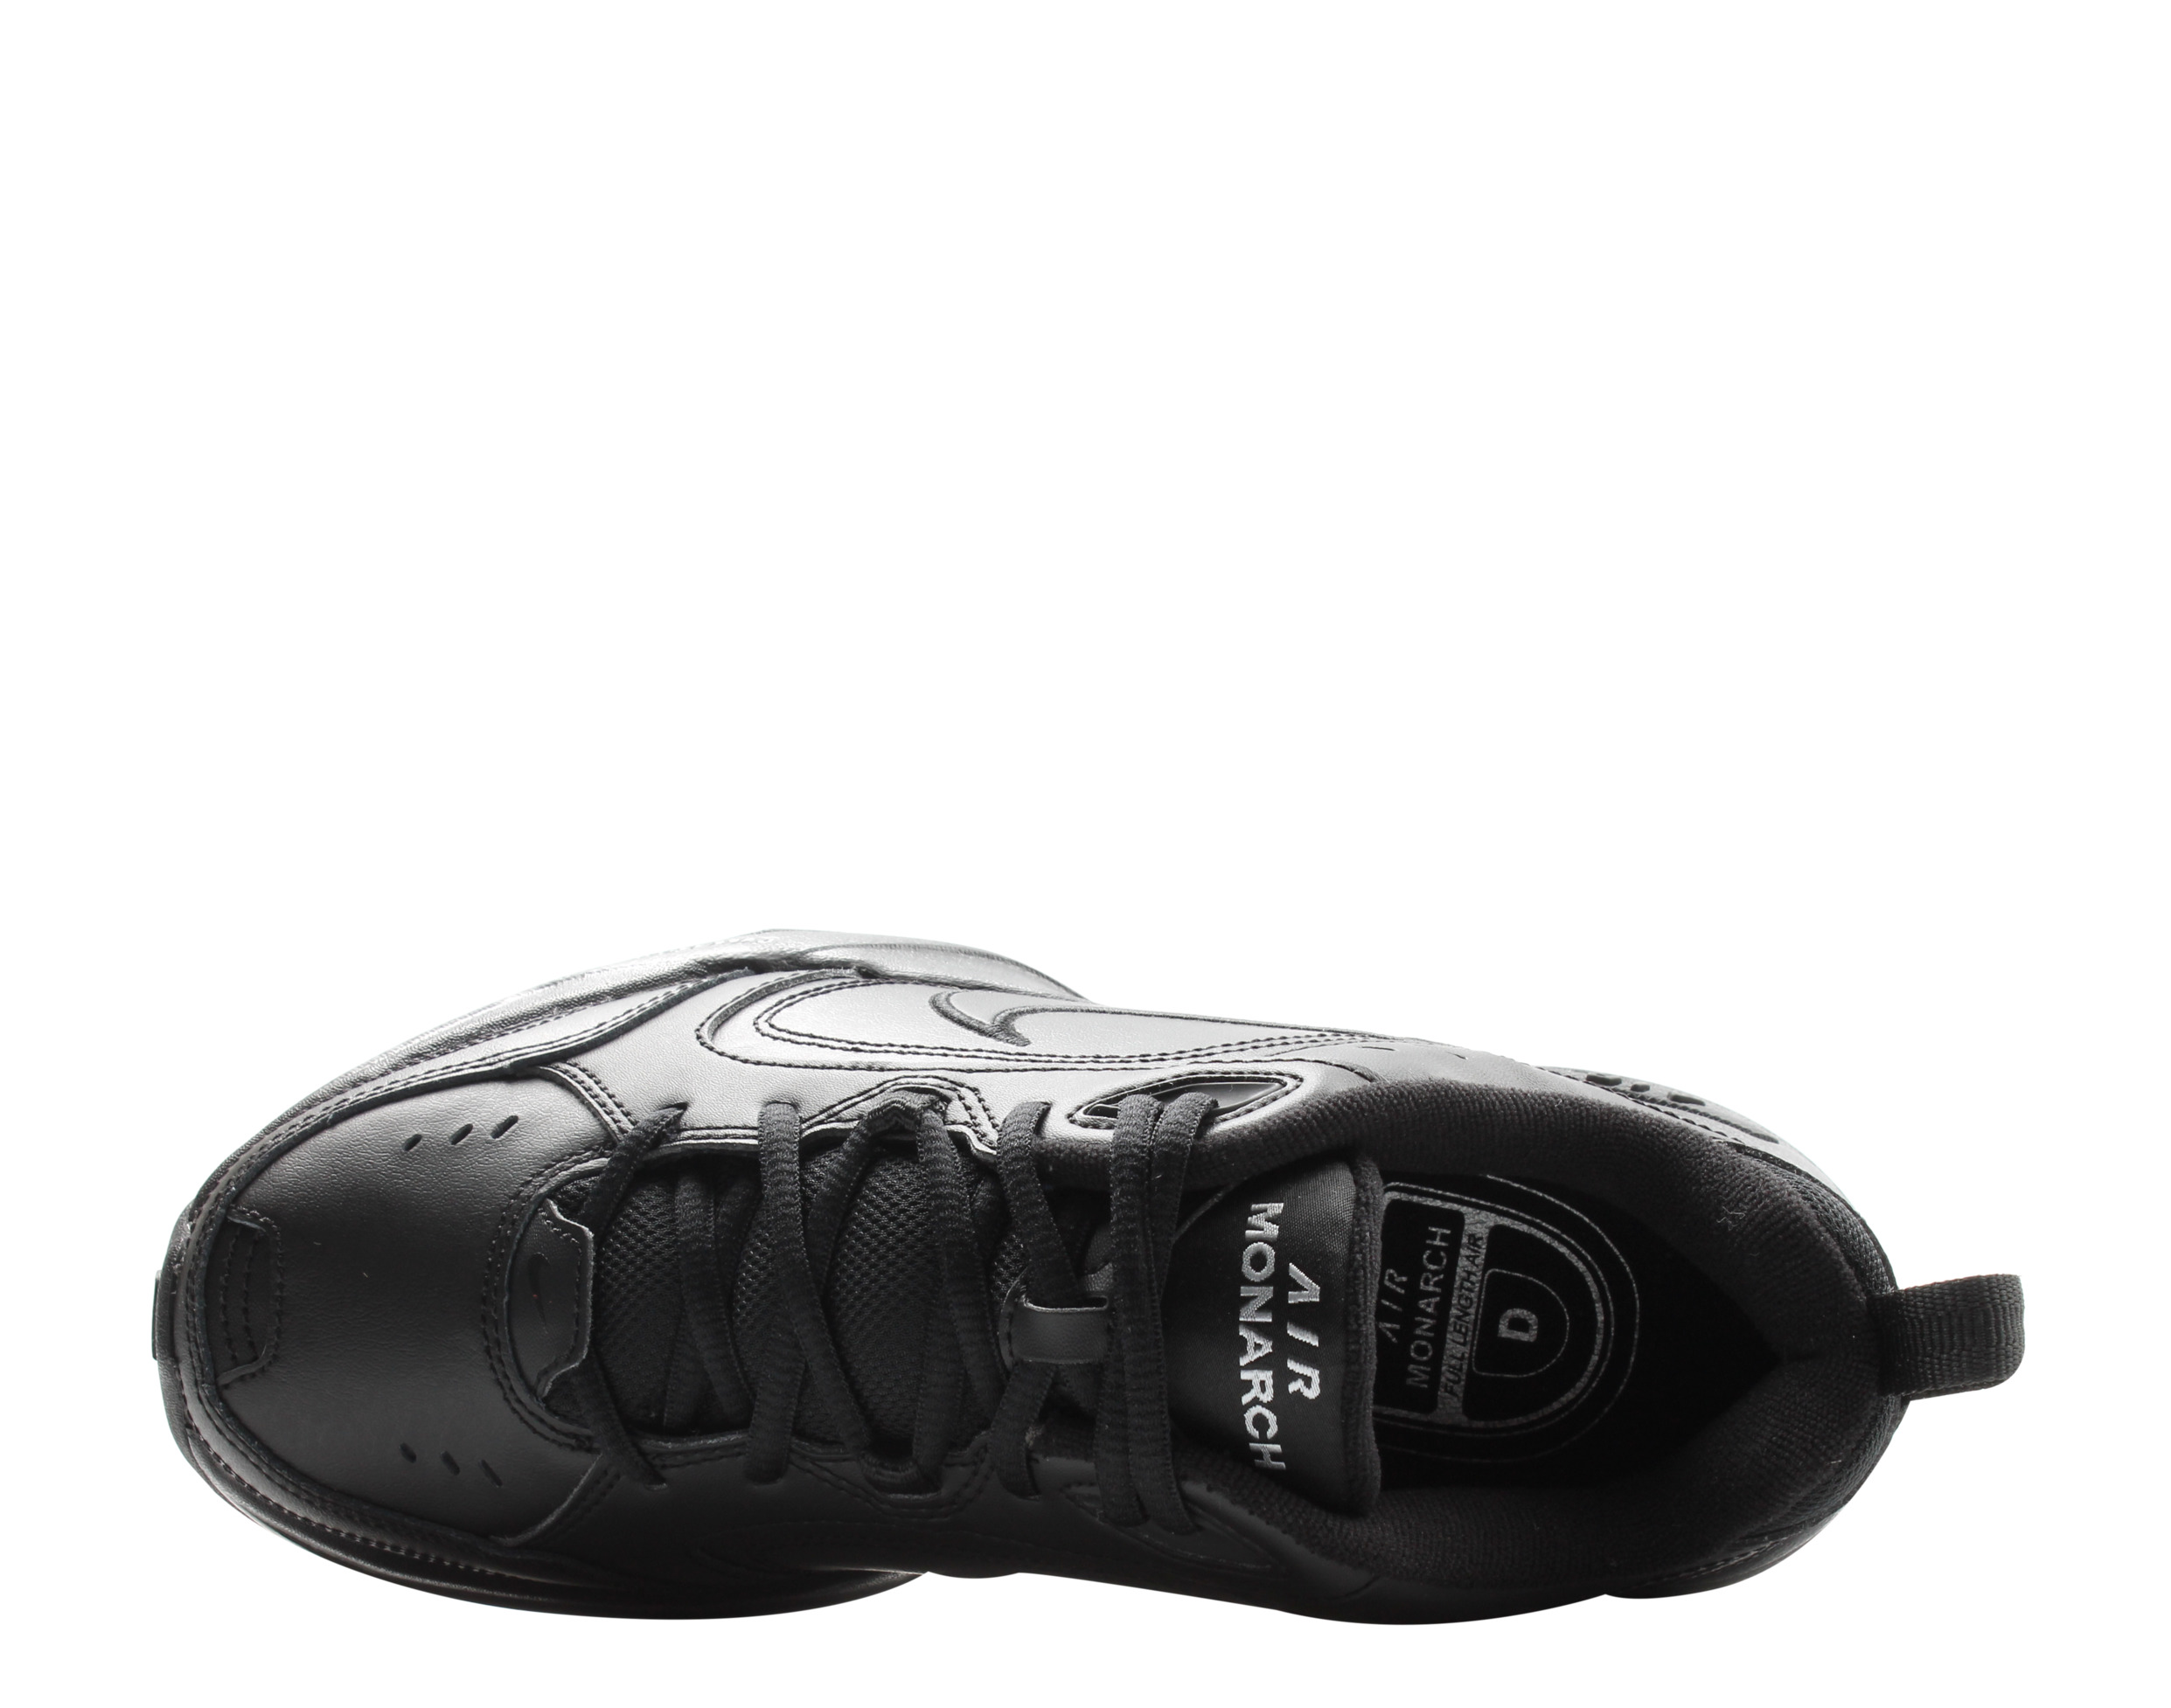 Nike Air Monach IV Men's Cross Training Shoes Size 9M - image 4 of 6